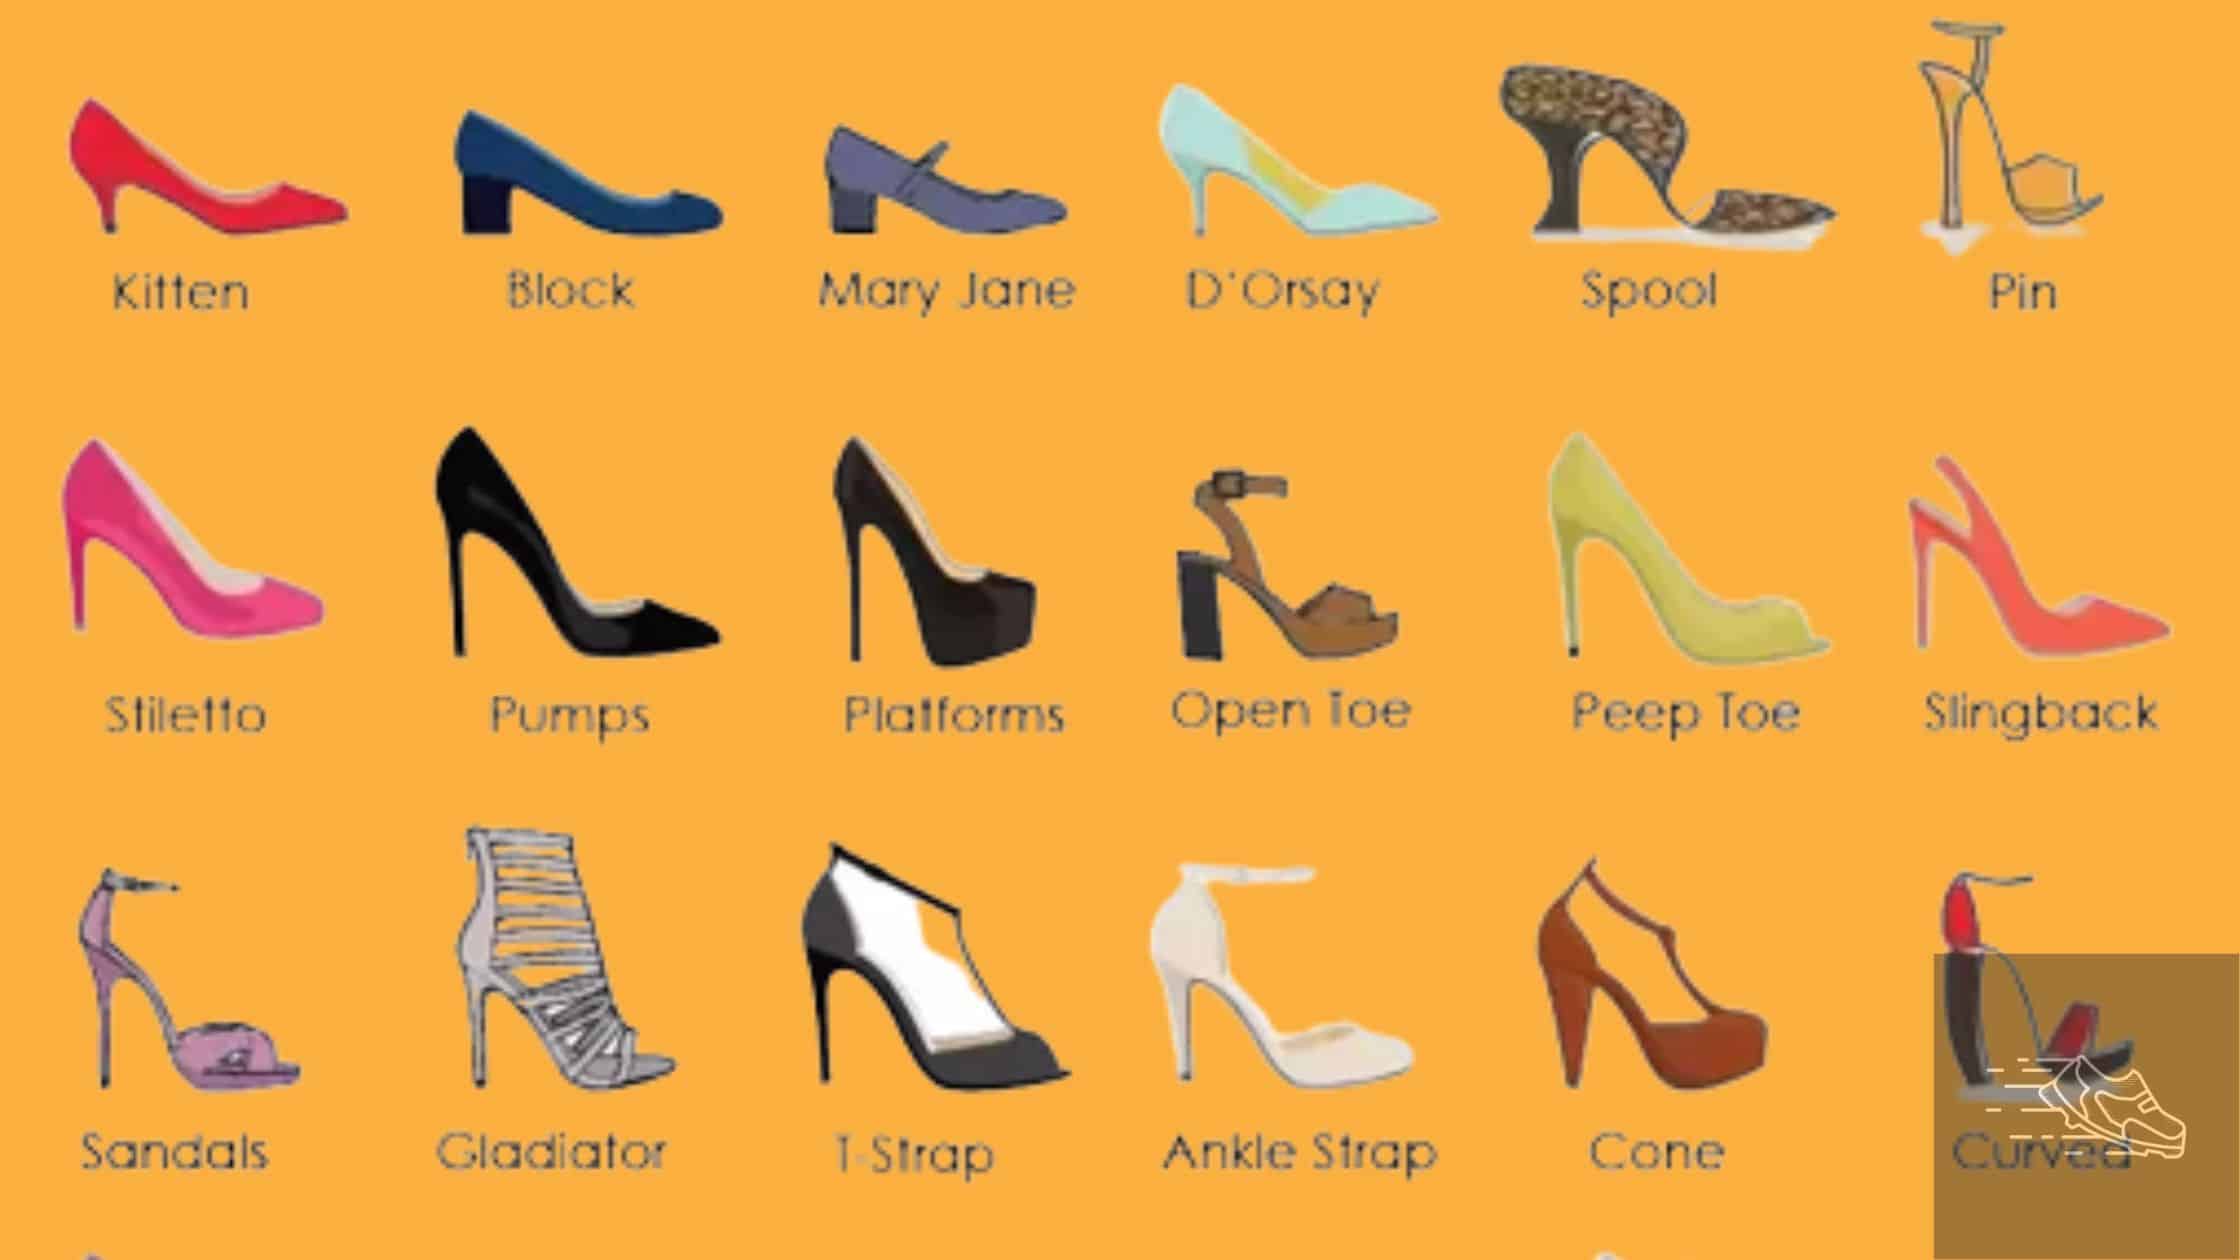 Types Of Heels: What Are Types Of Heels - Footwearfact